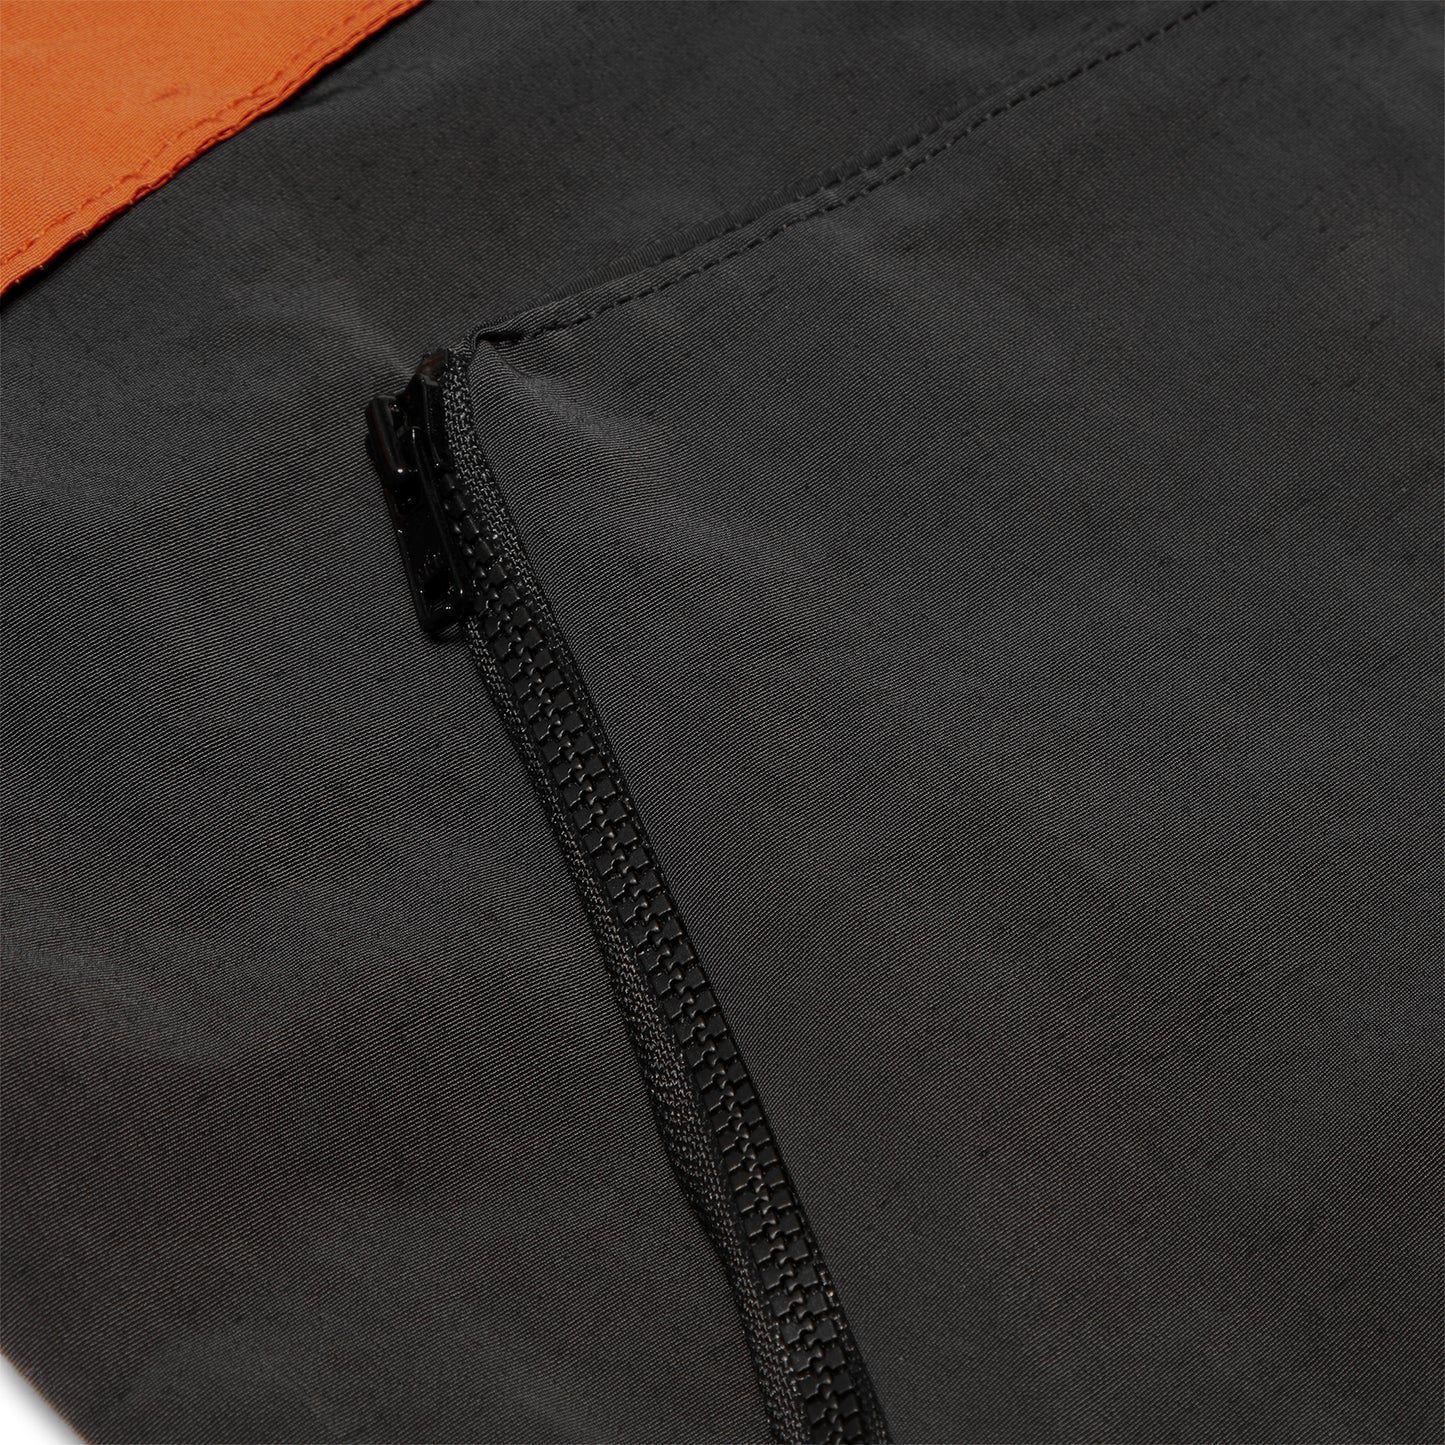 NASH Utility Jacket (Vanta Black/Safety Orange)